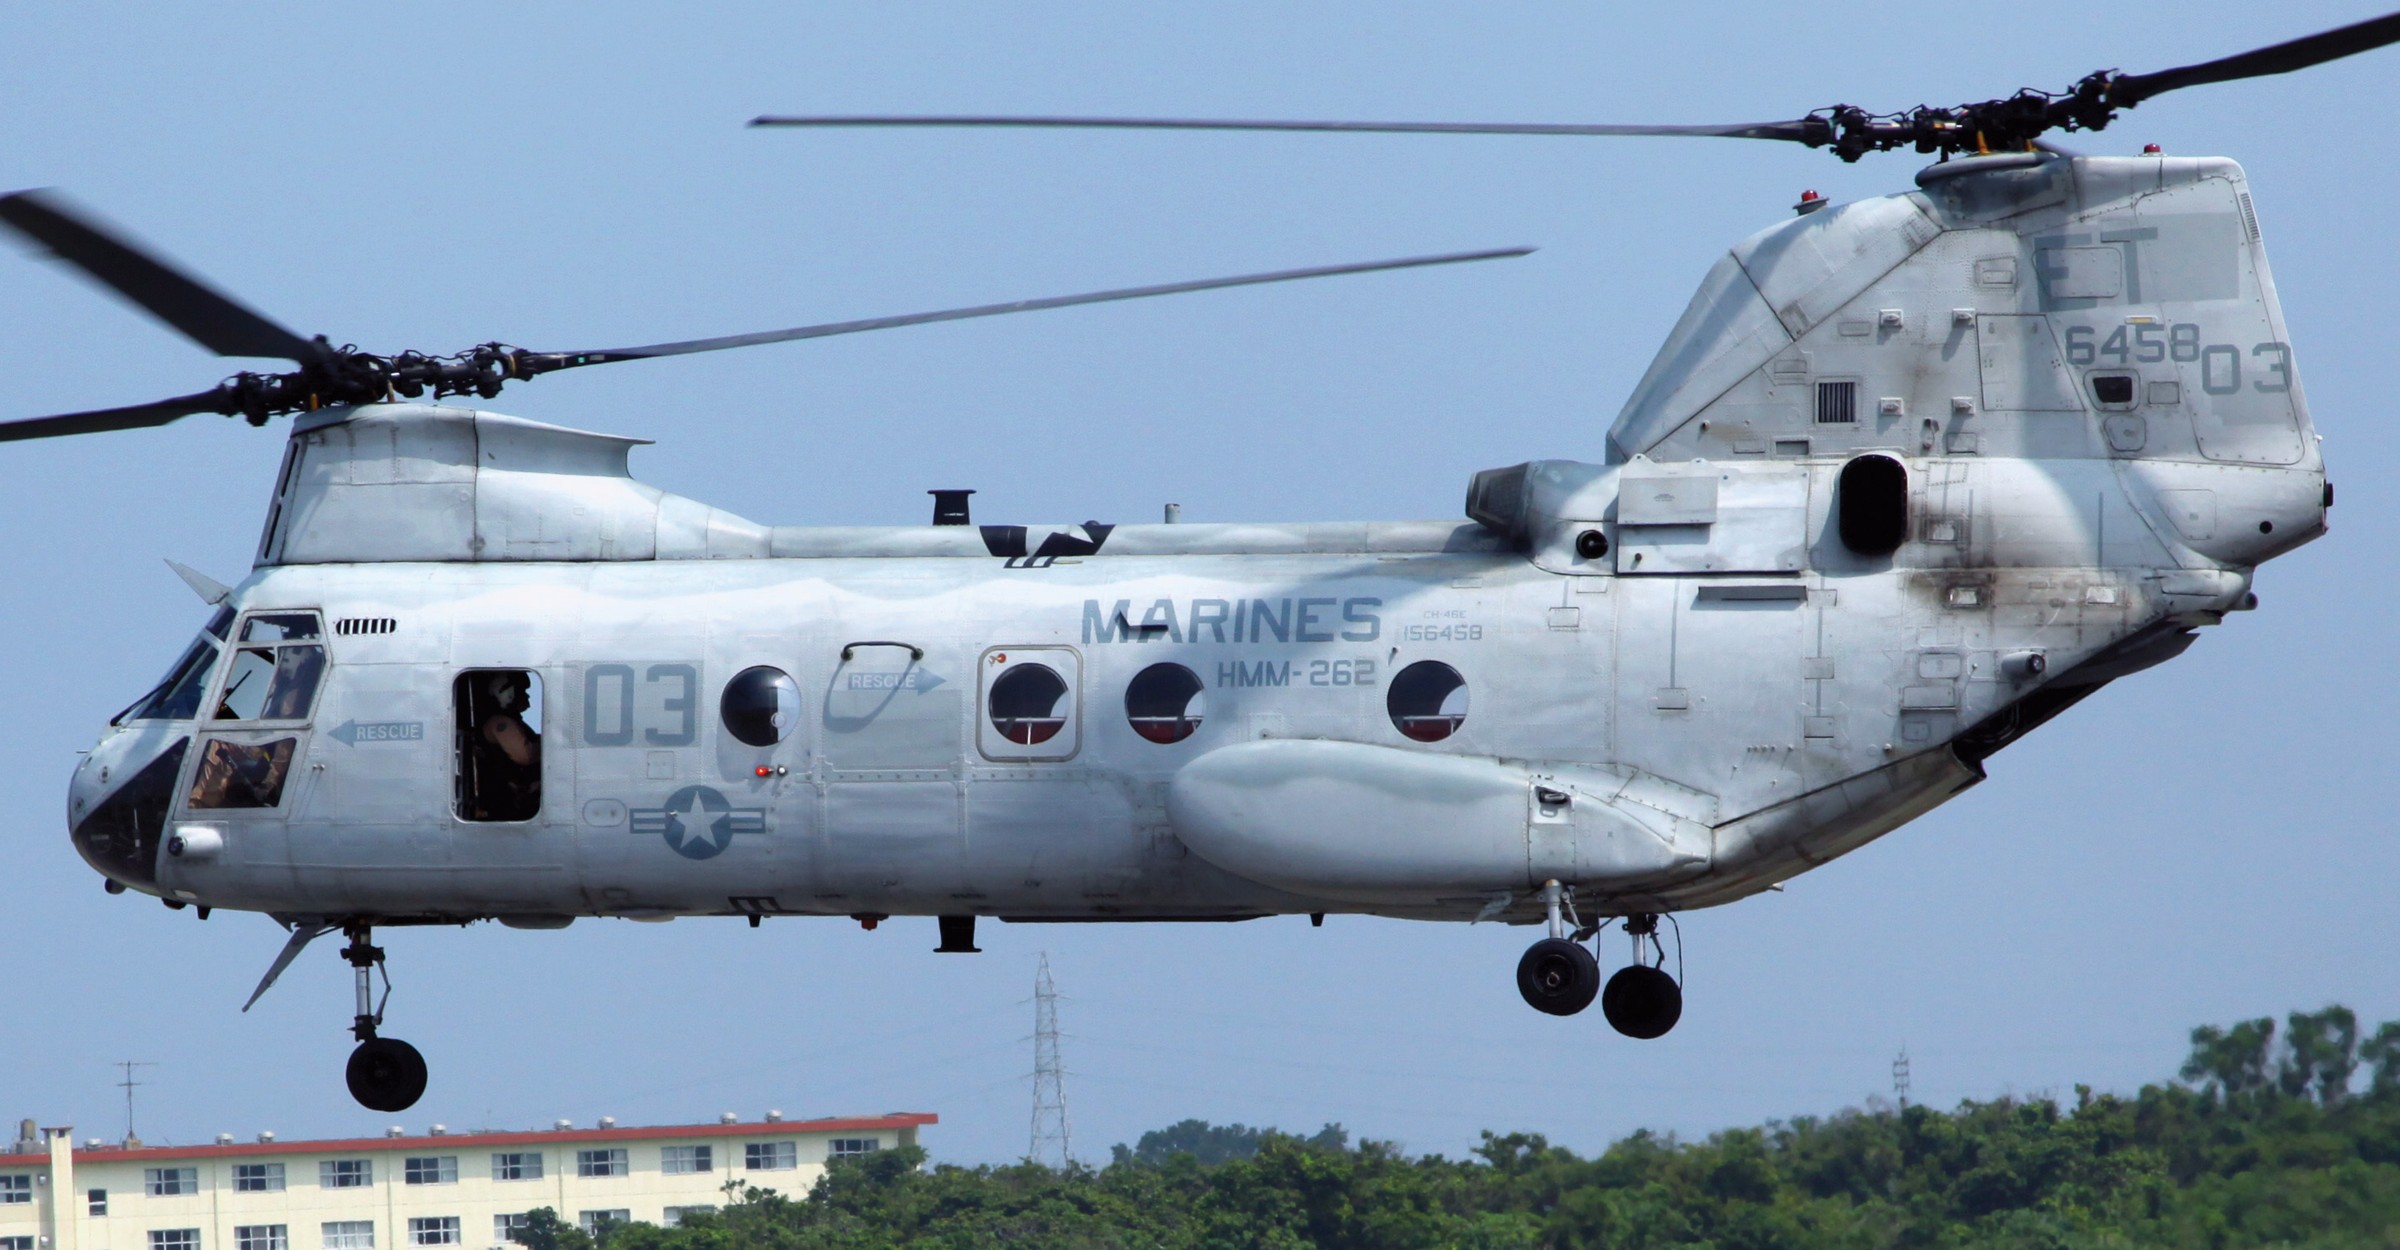 hmm-262 flying tigers marine medium helicopter squadron usmc ch-46e sea knight mcas futenma japan 02x